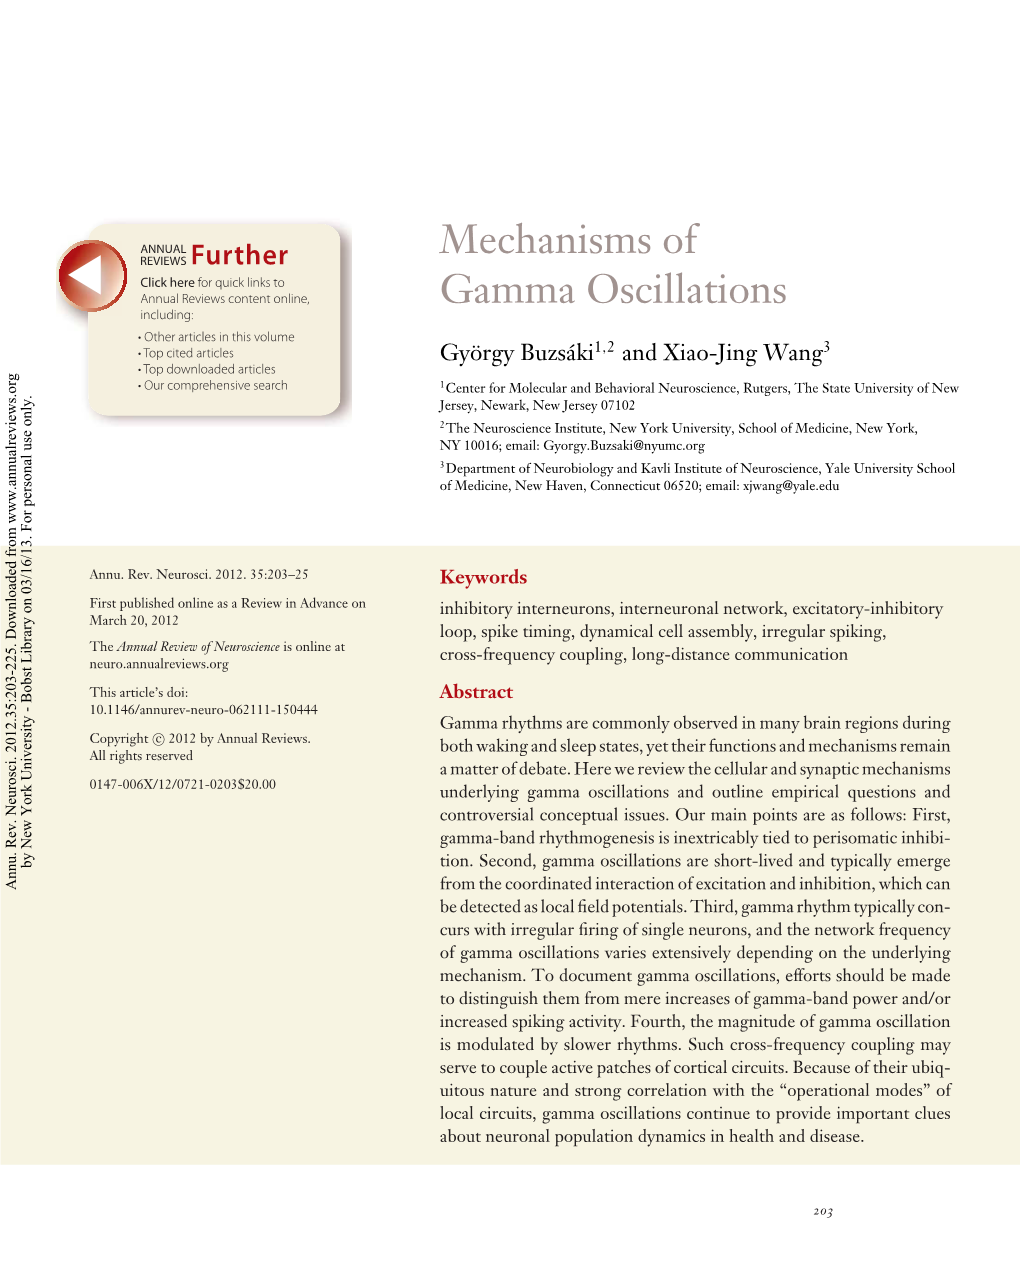 Mechanisms of Gamma Oscillations